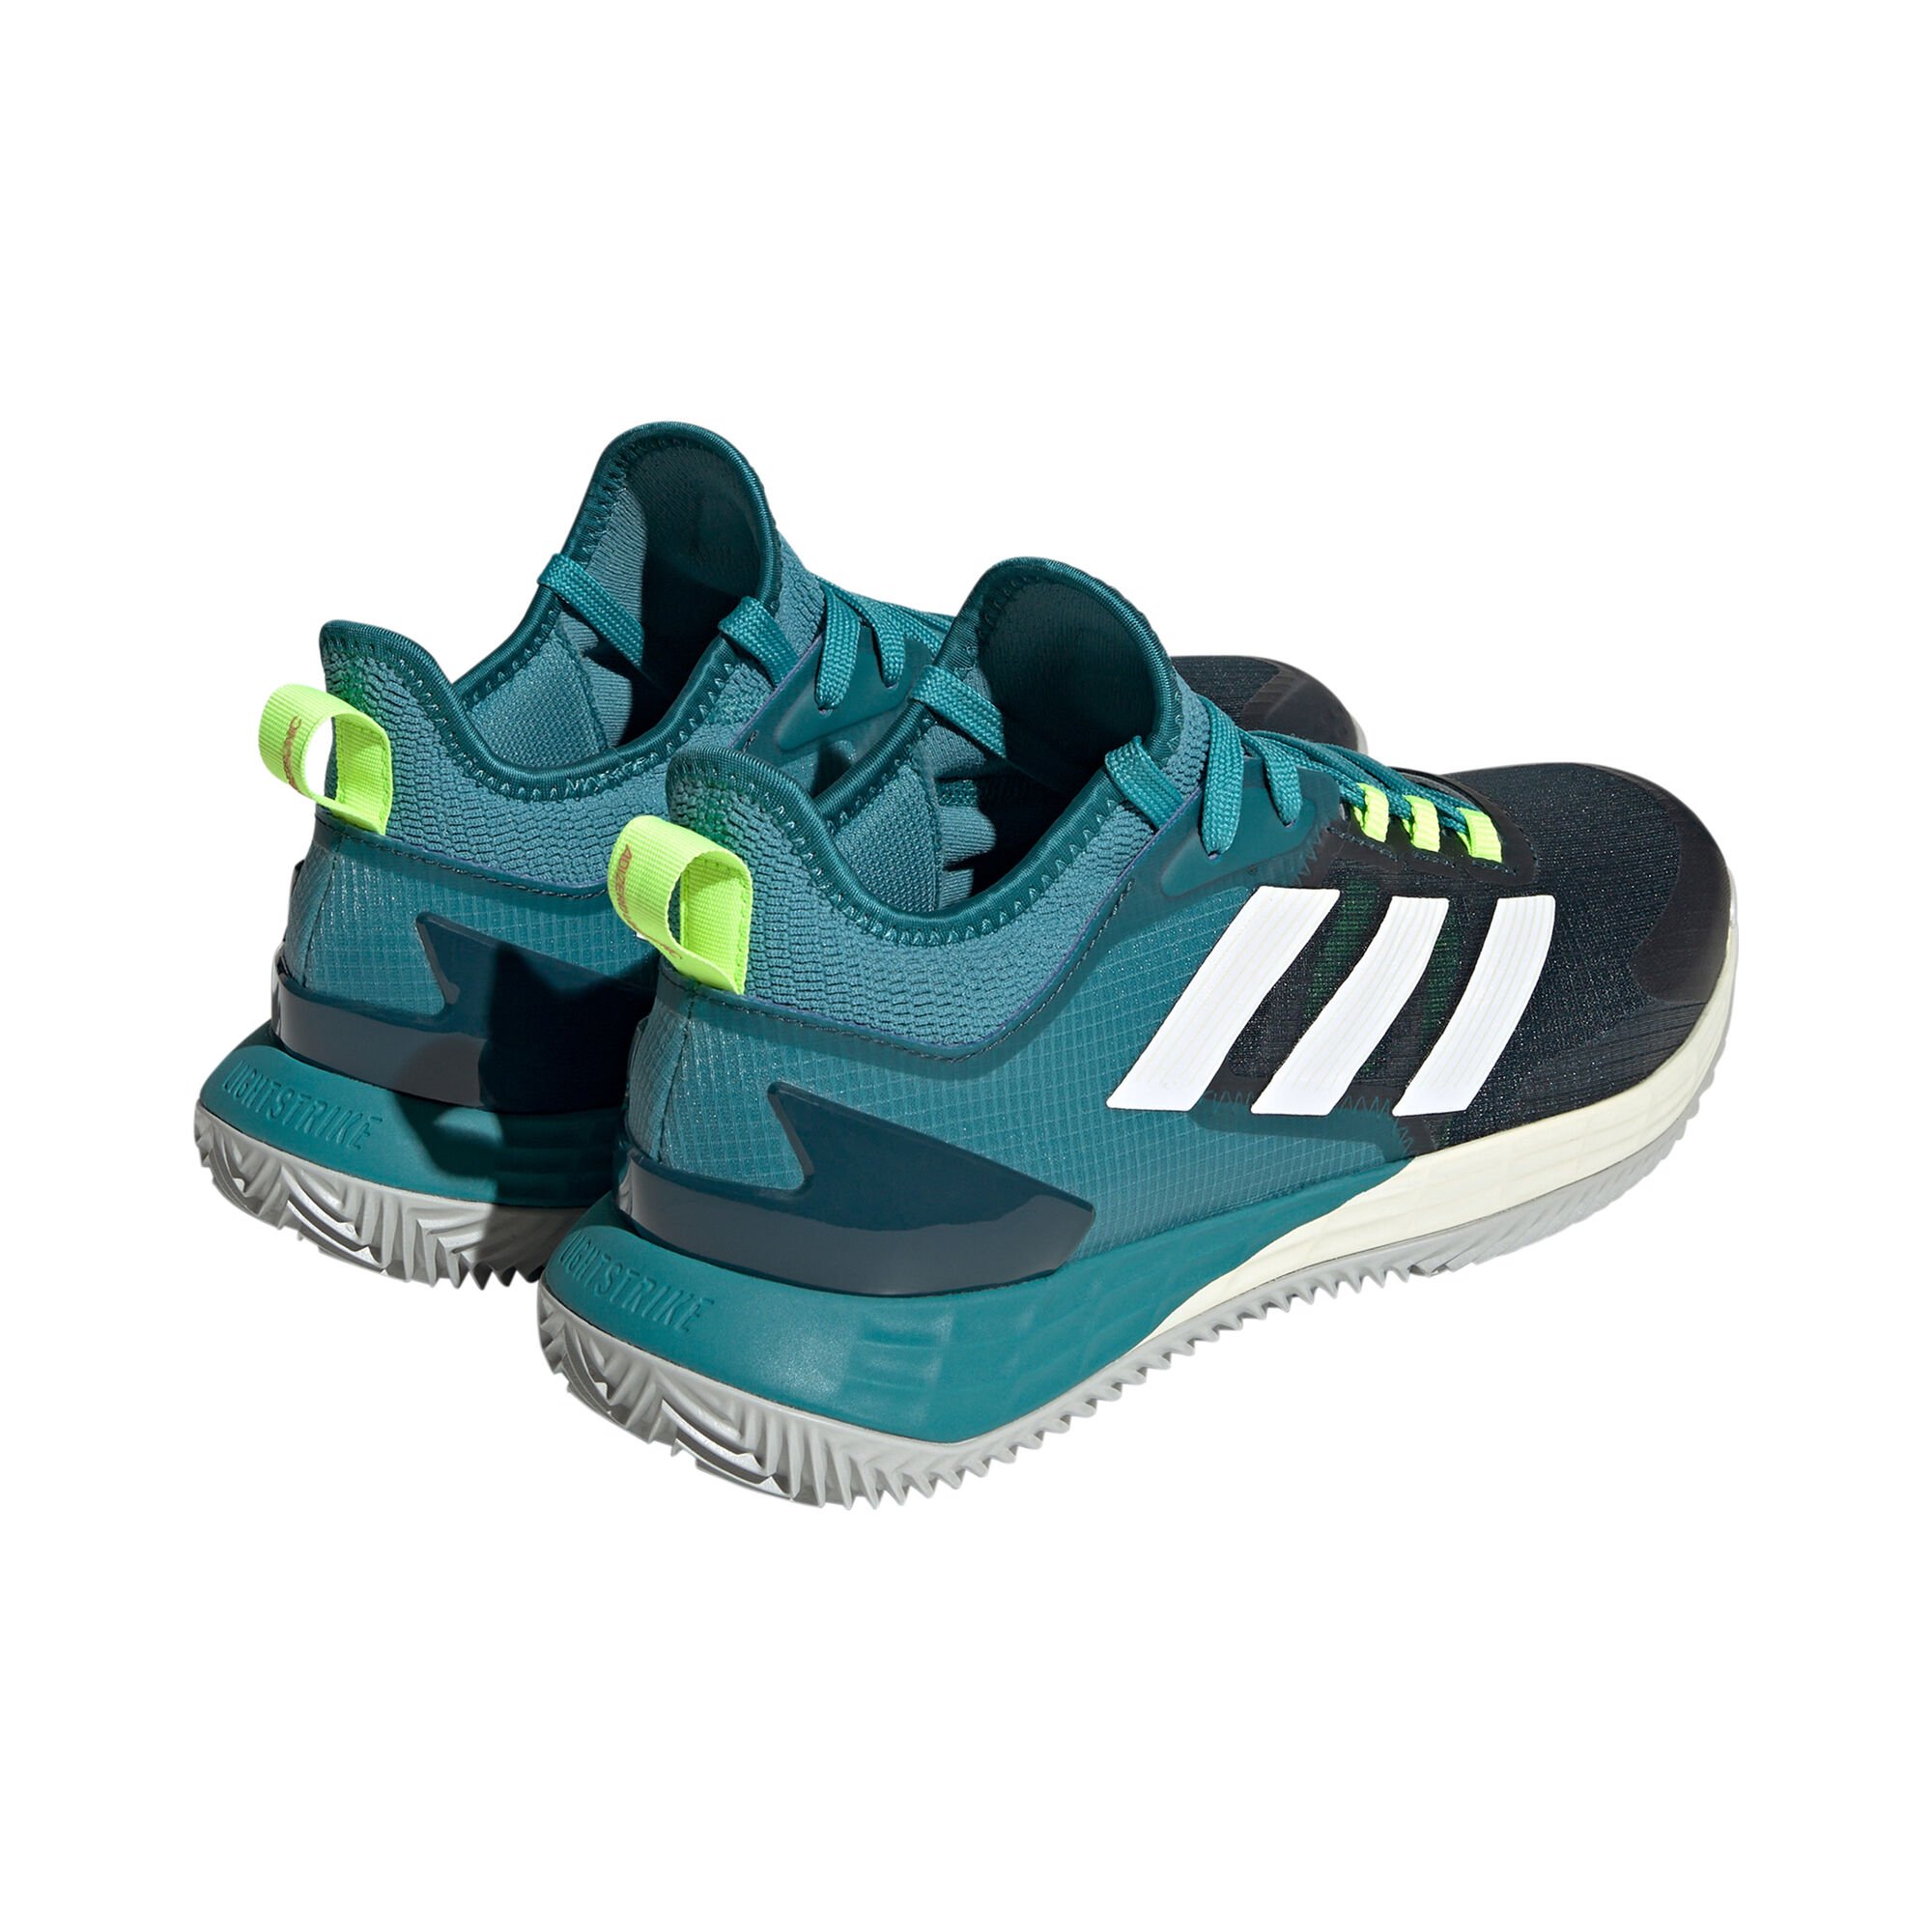 Adizero Ubersonic 4.1 Tennis Shoes